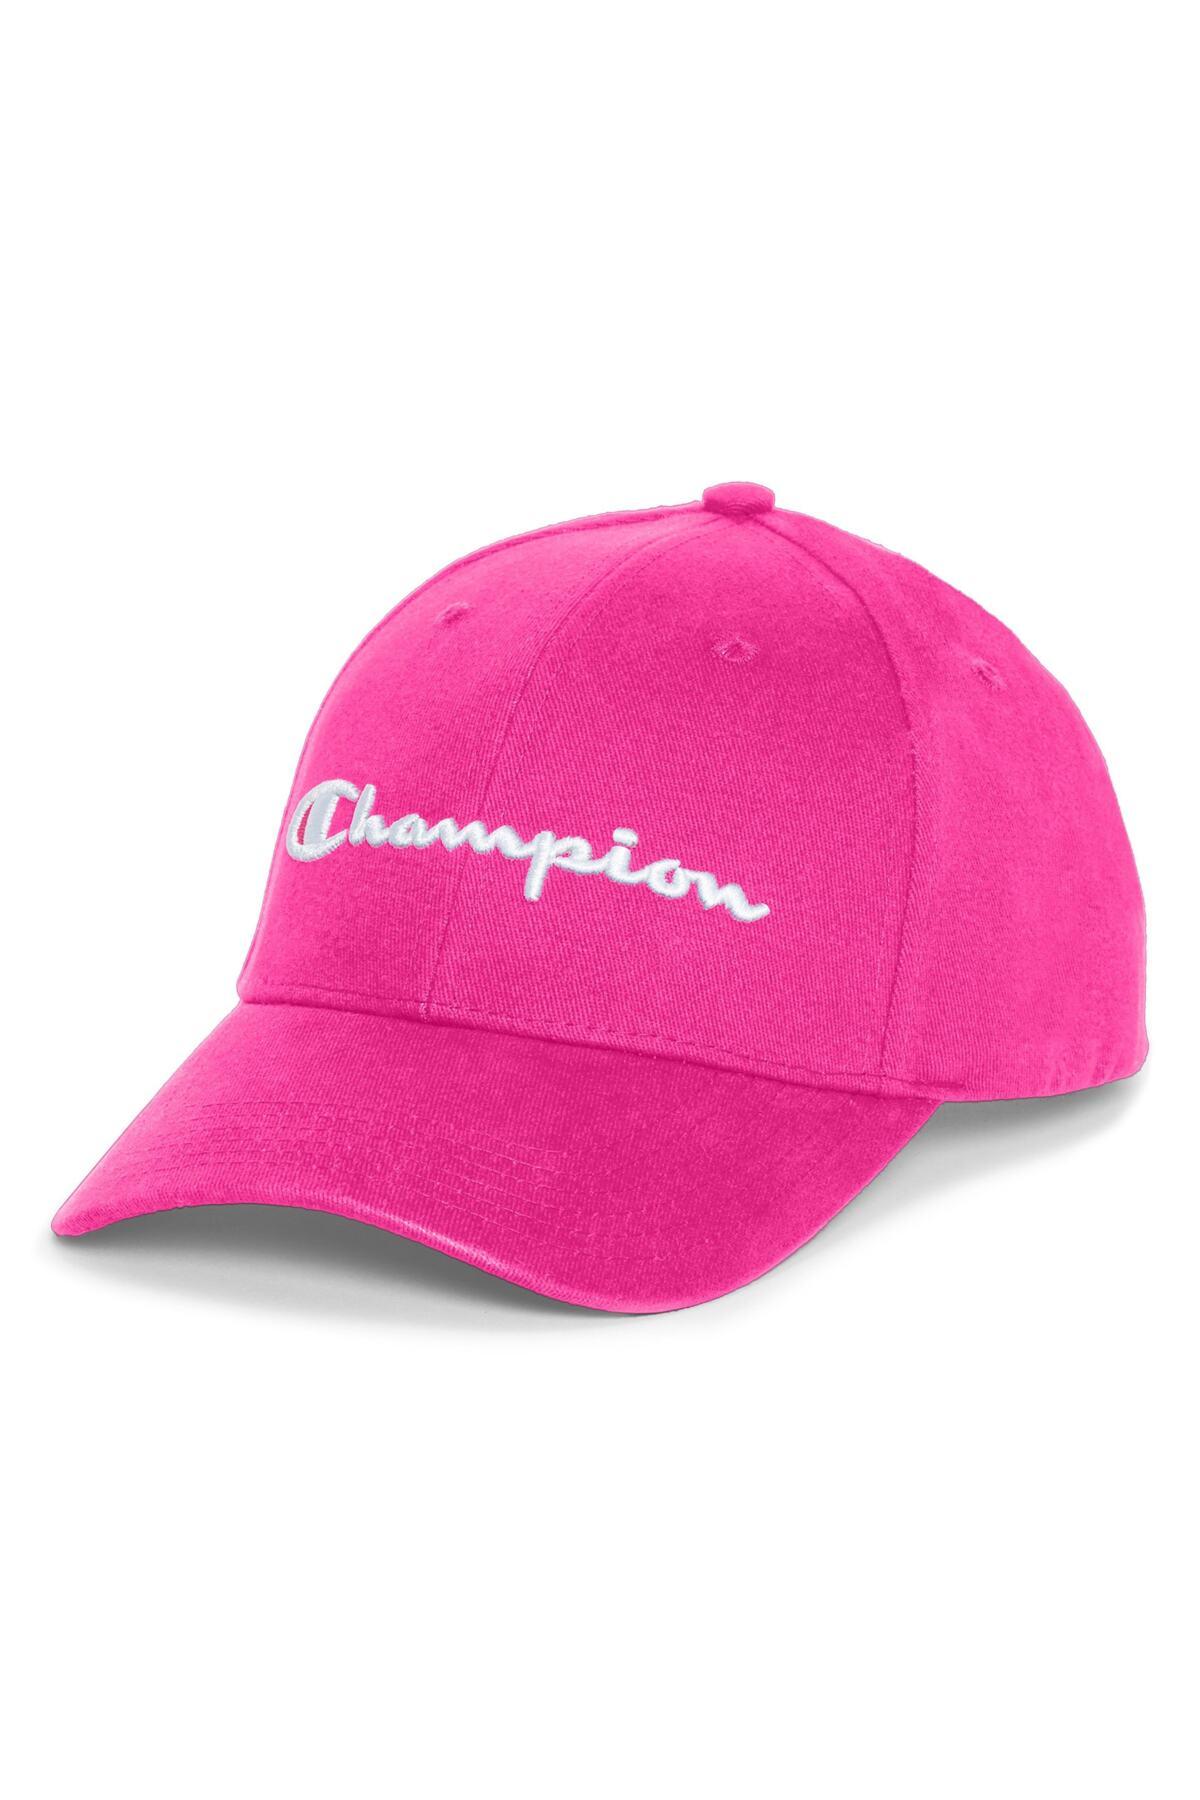 champion pink cap